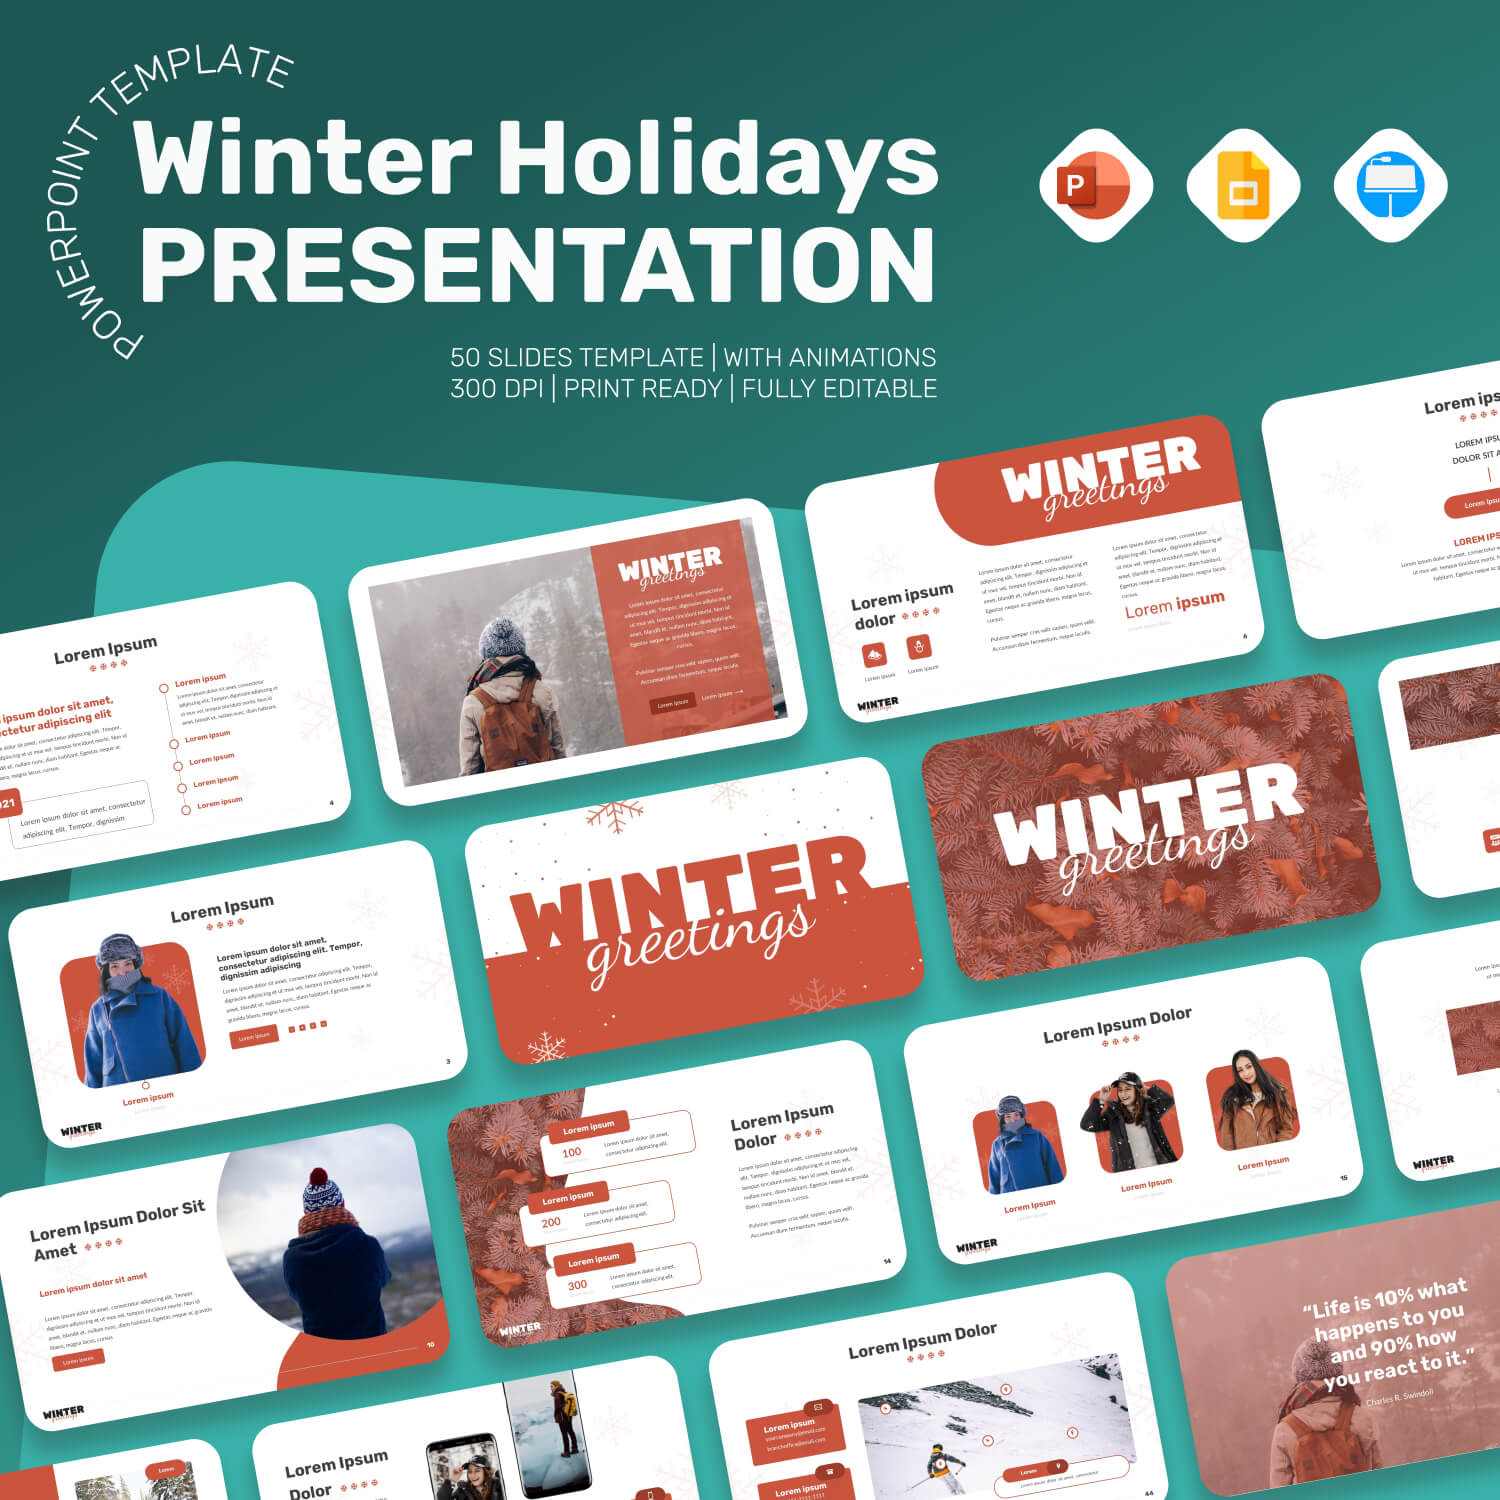 Winter Holidays Presentation cover image.